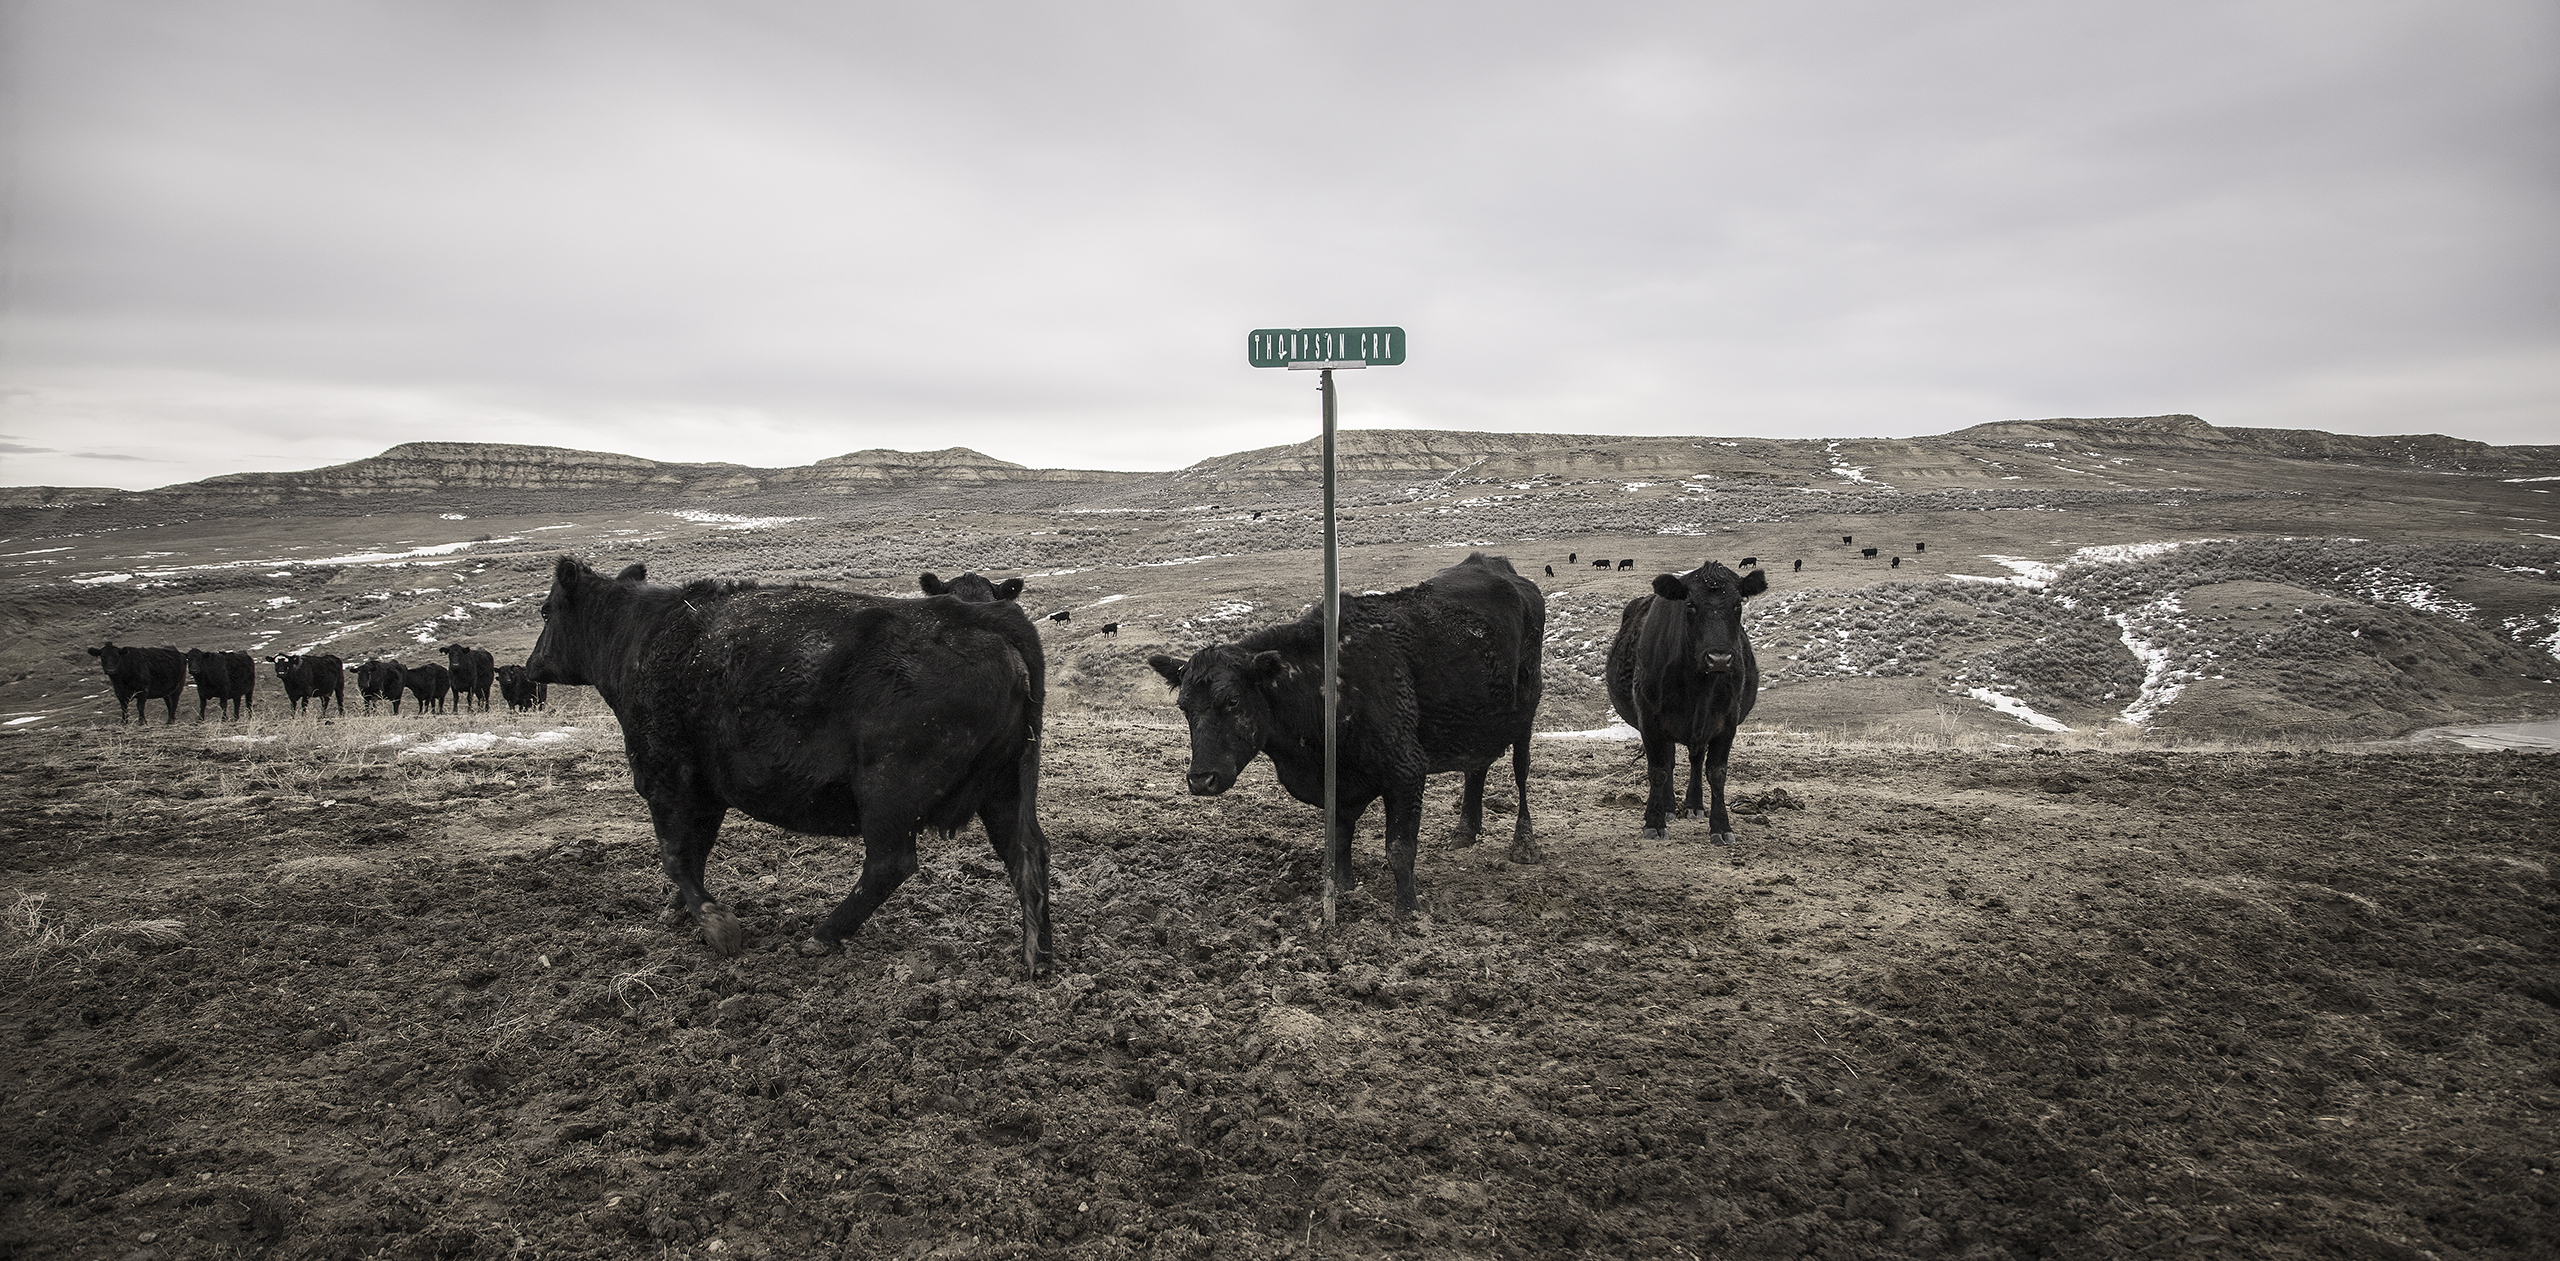 Thompson Creek Cows, Johnson County, March 6, 2014